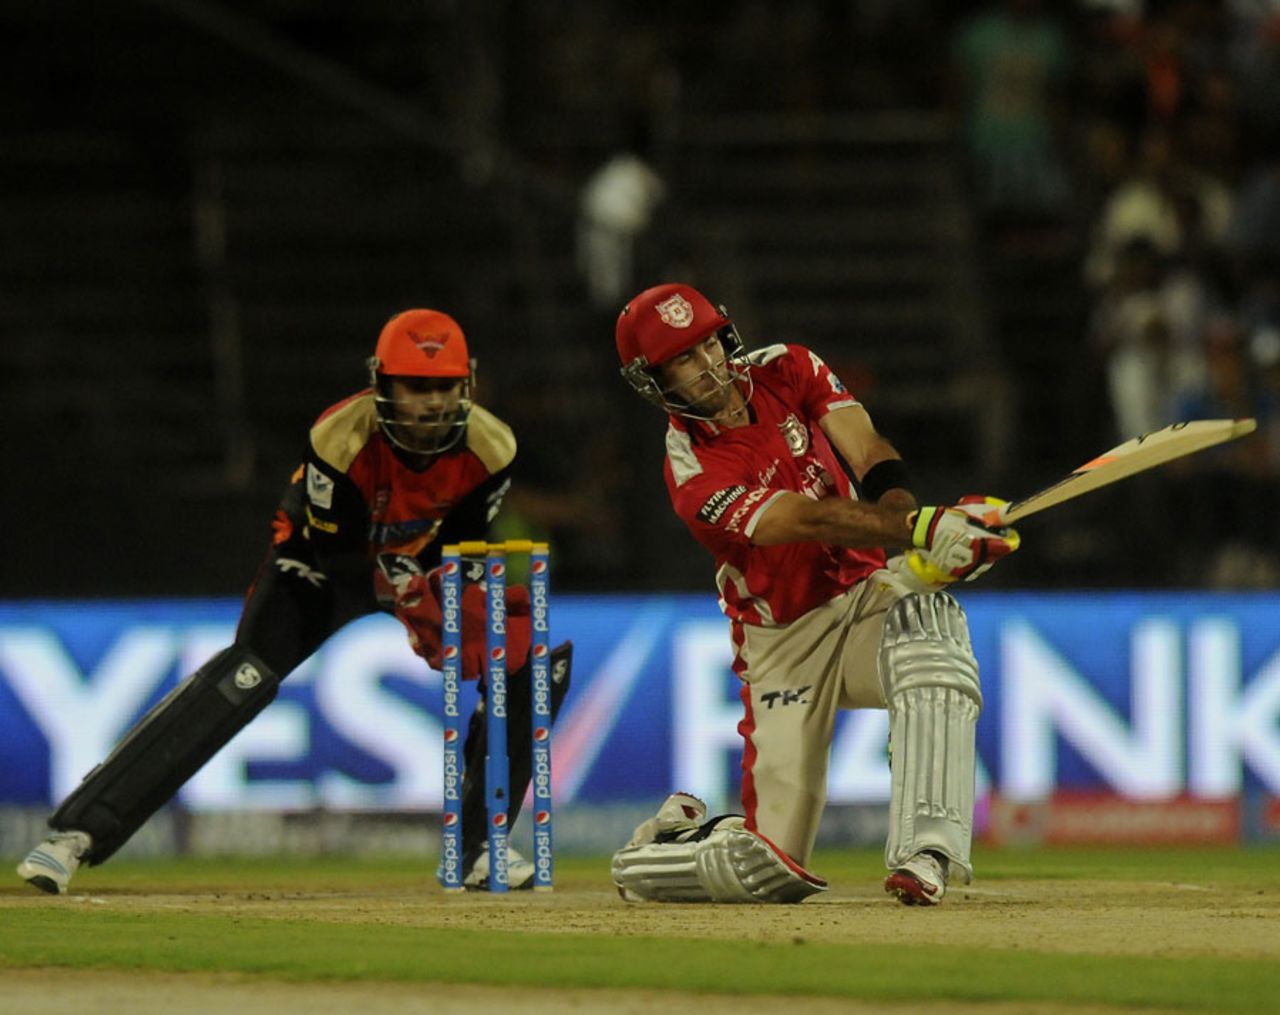 Glenn Maxwell targets the leg side, Kings XI Punjab v Sunrisers Hyderabad, IPL 2014, Sharjah, April 22, 2014